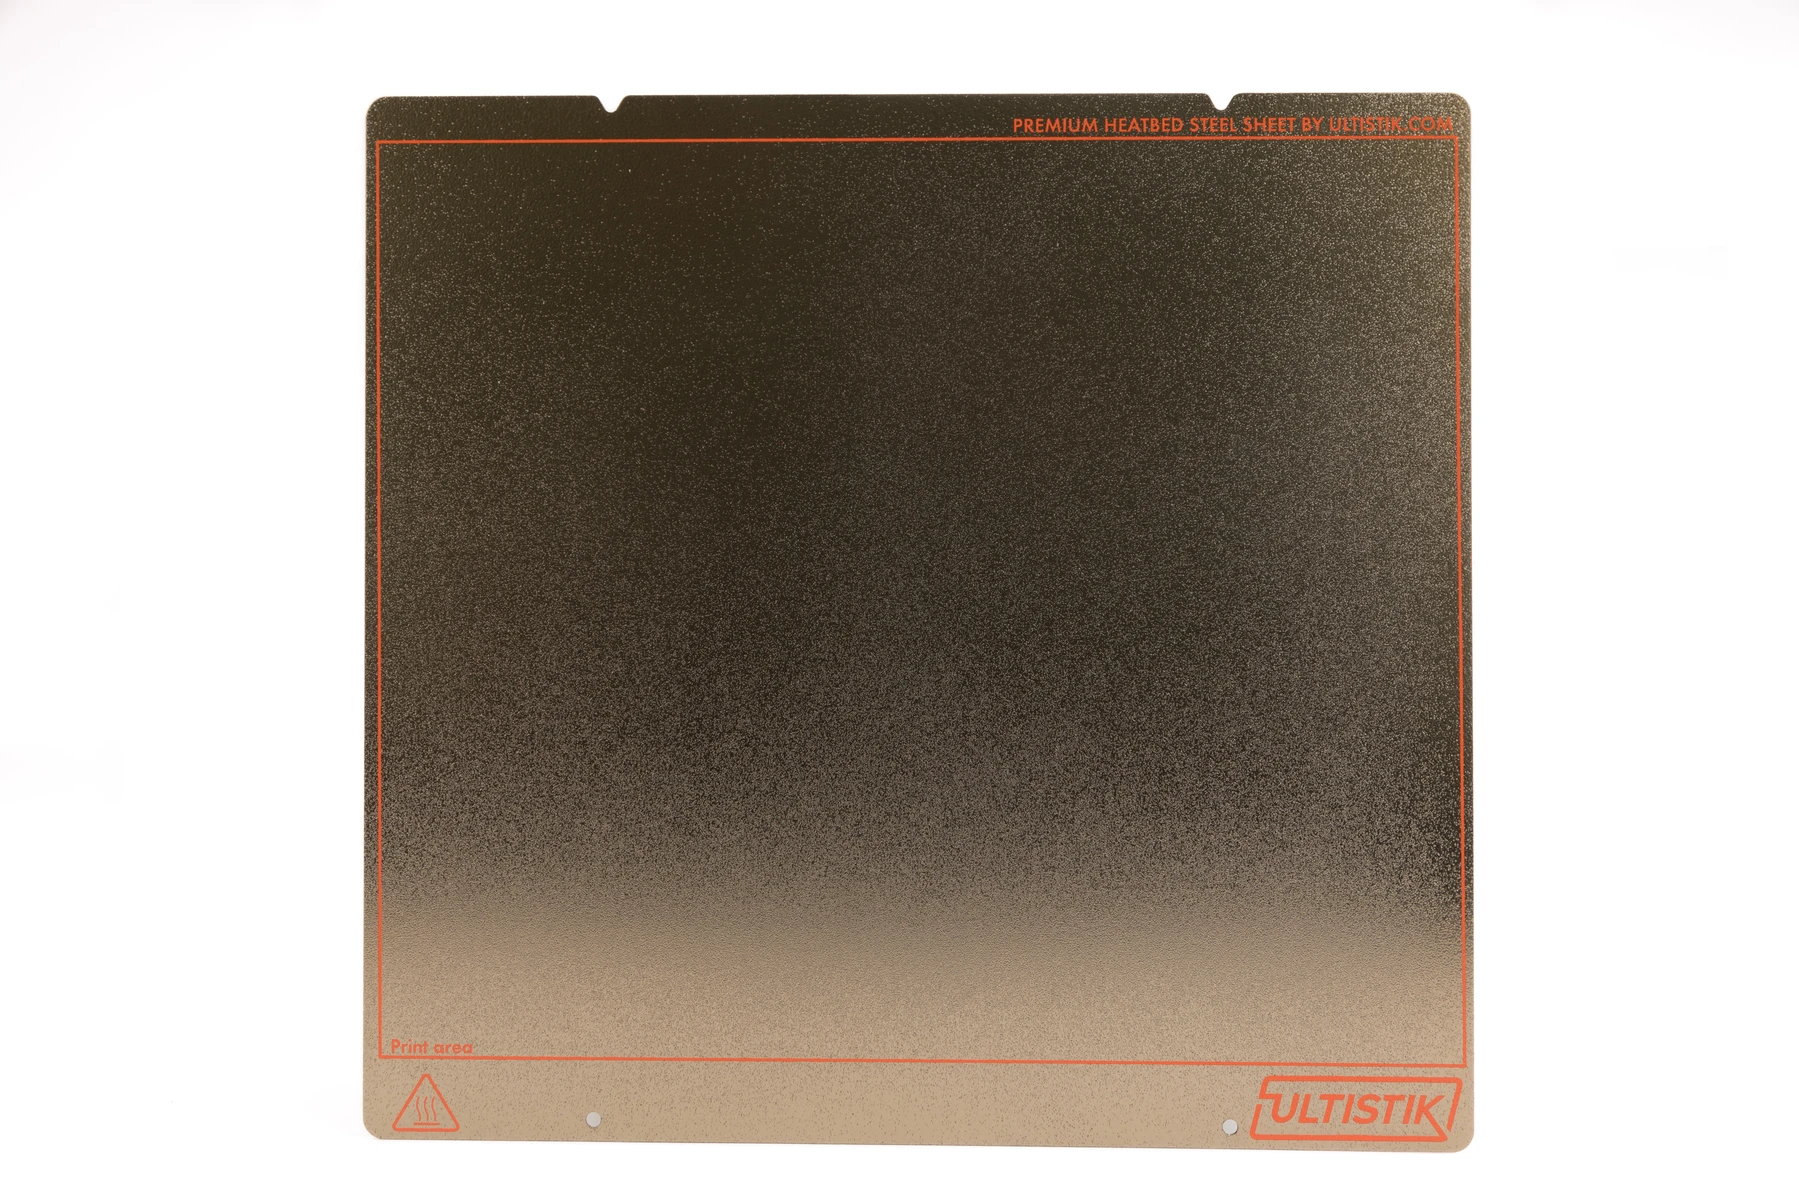 ULTISTIK Premium Powder Coated Ultem (PEI) Build Plate 235 x 235 Gold Edition for 3D printing.